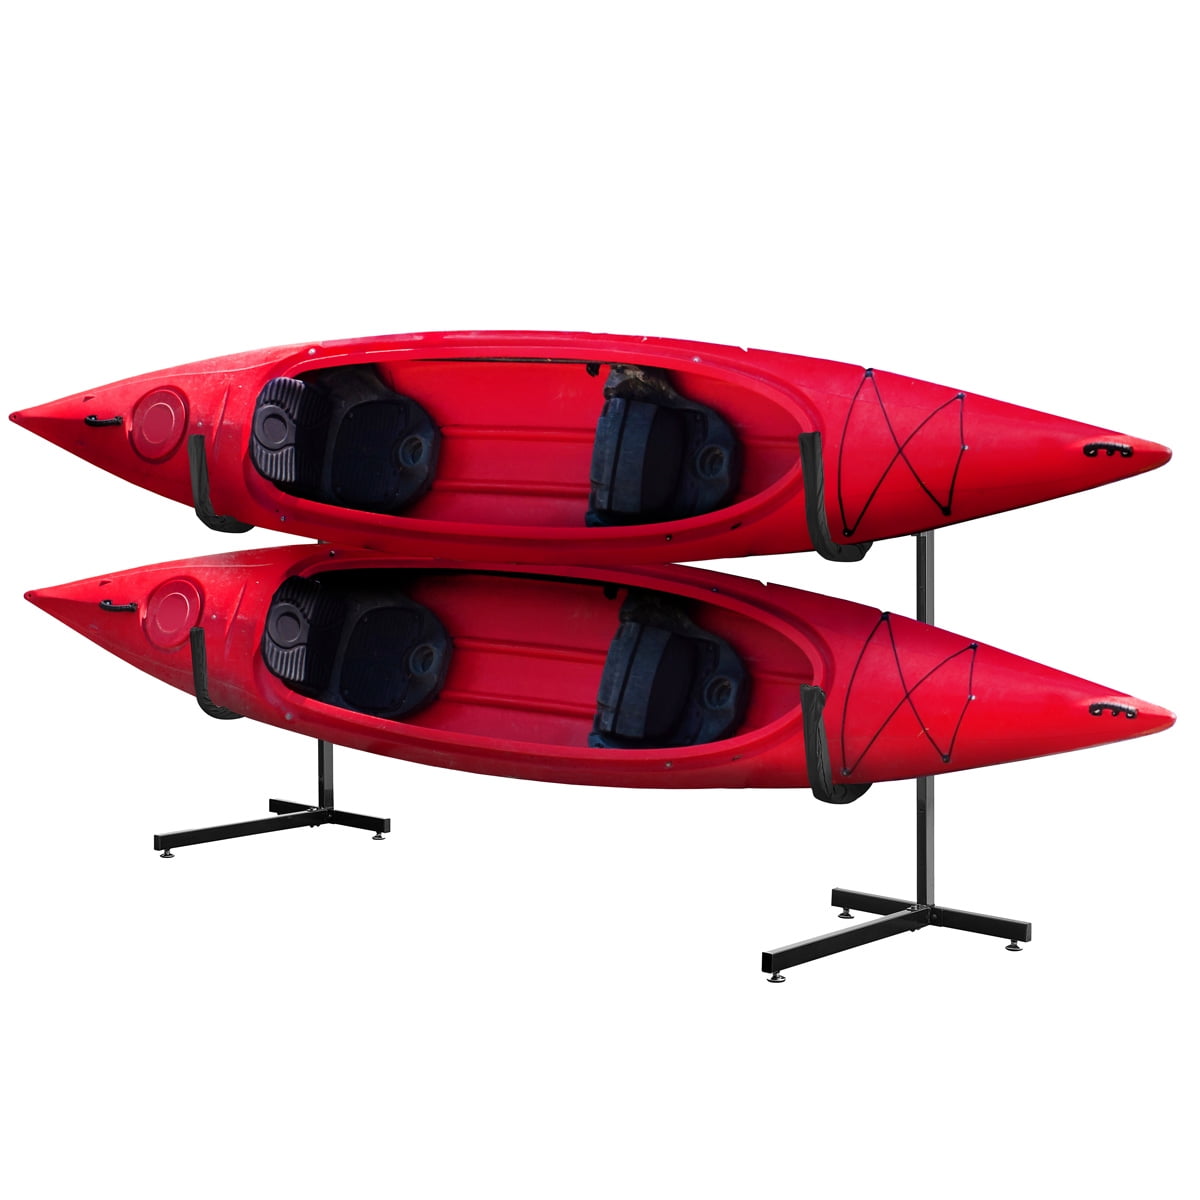 J Hooks Lash Hooks for Kayaks Canoes Boats Accessories Lashing Cargo 8 Pack 